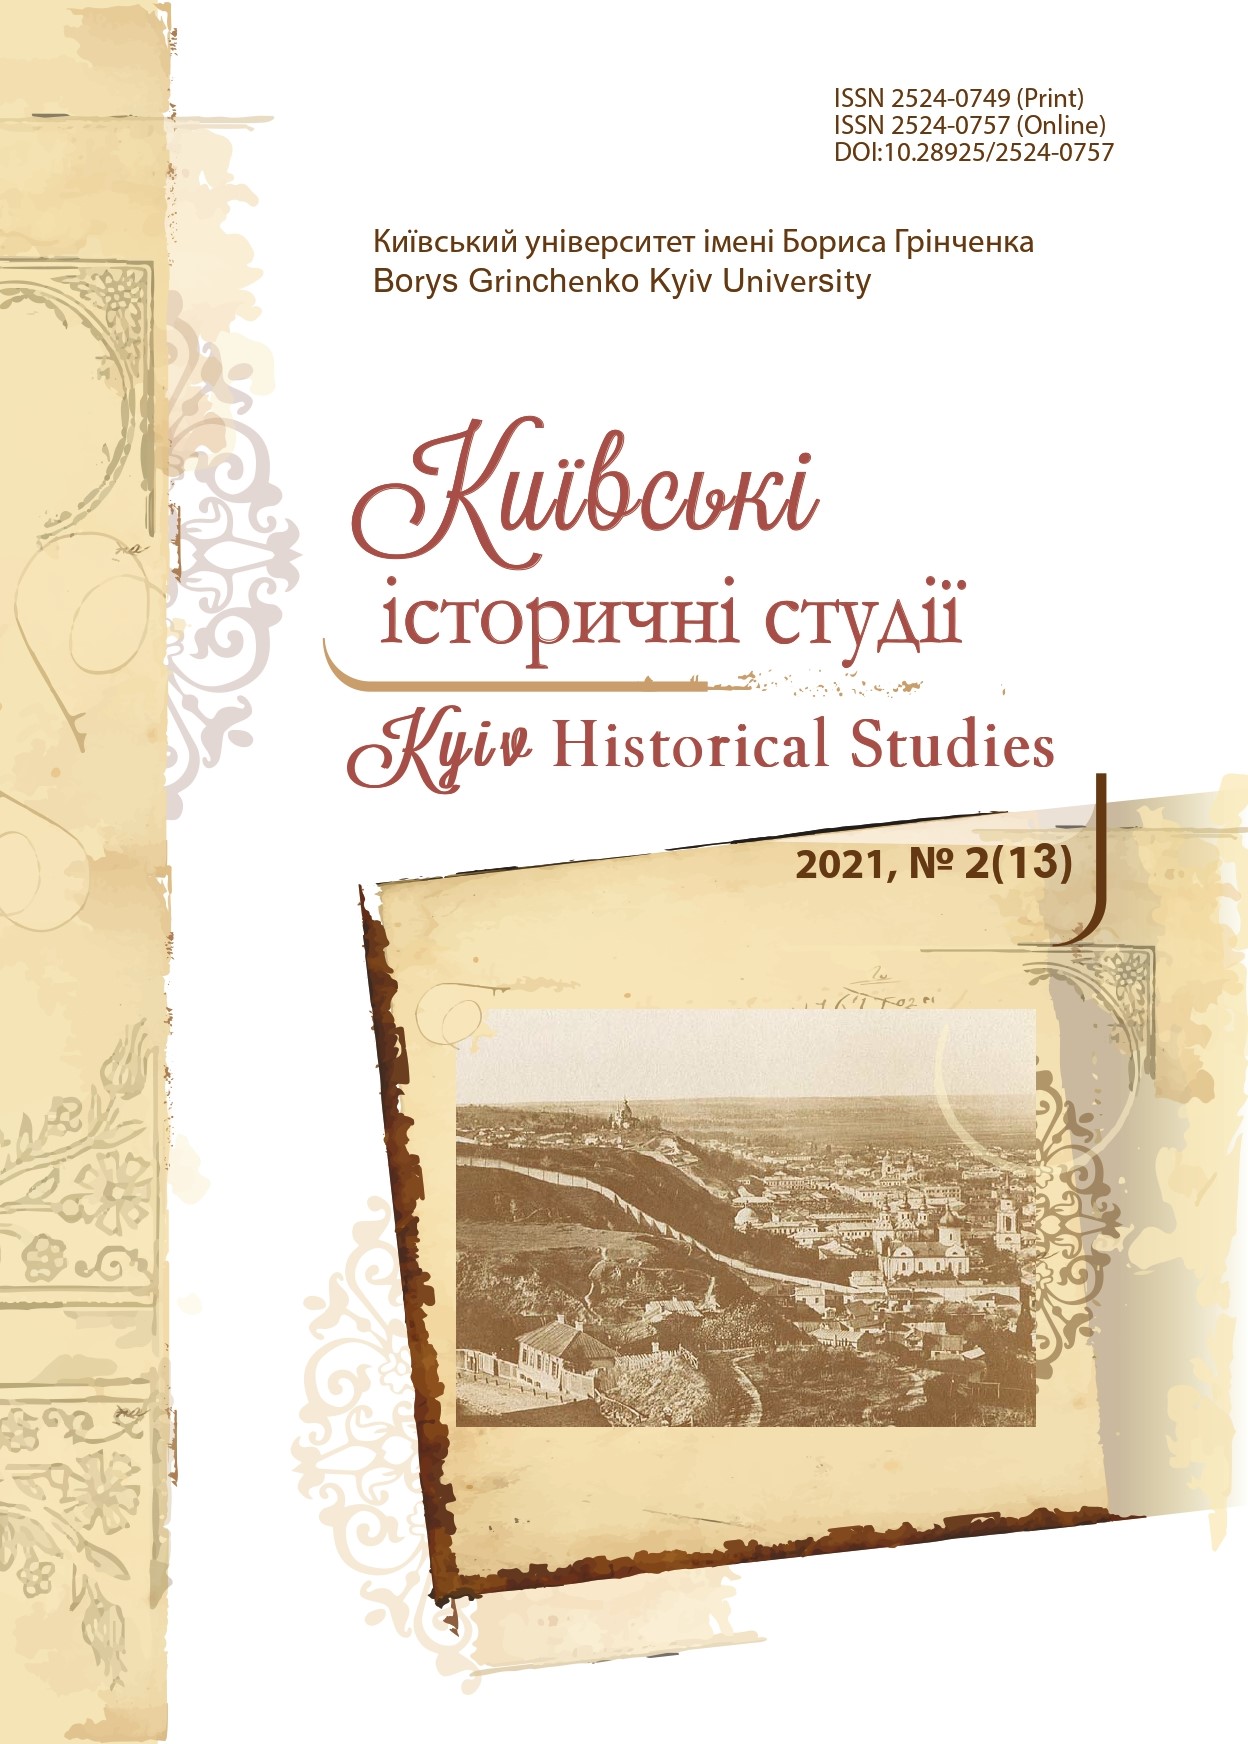 					View No. 2 (13) (2021): Kyiv Historical Studies
				